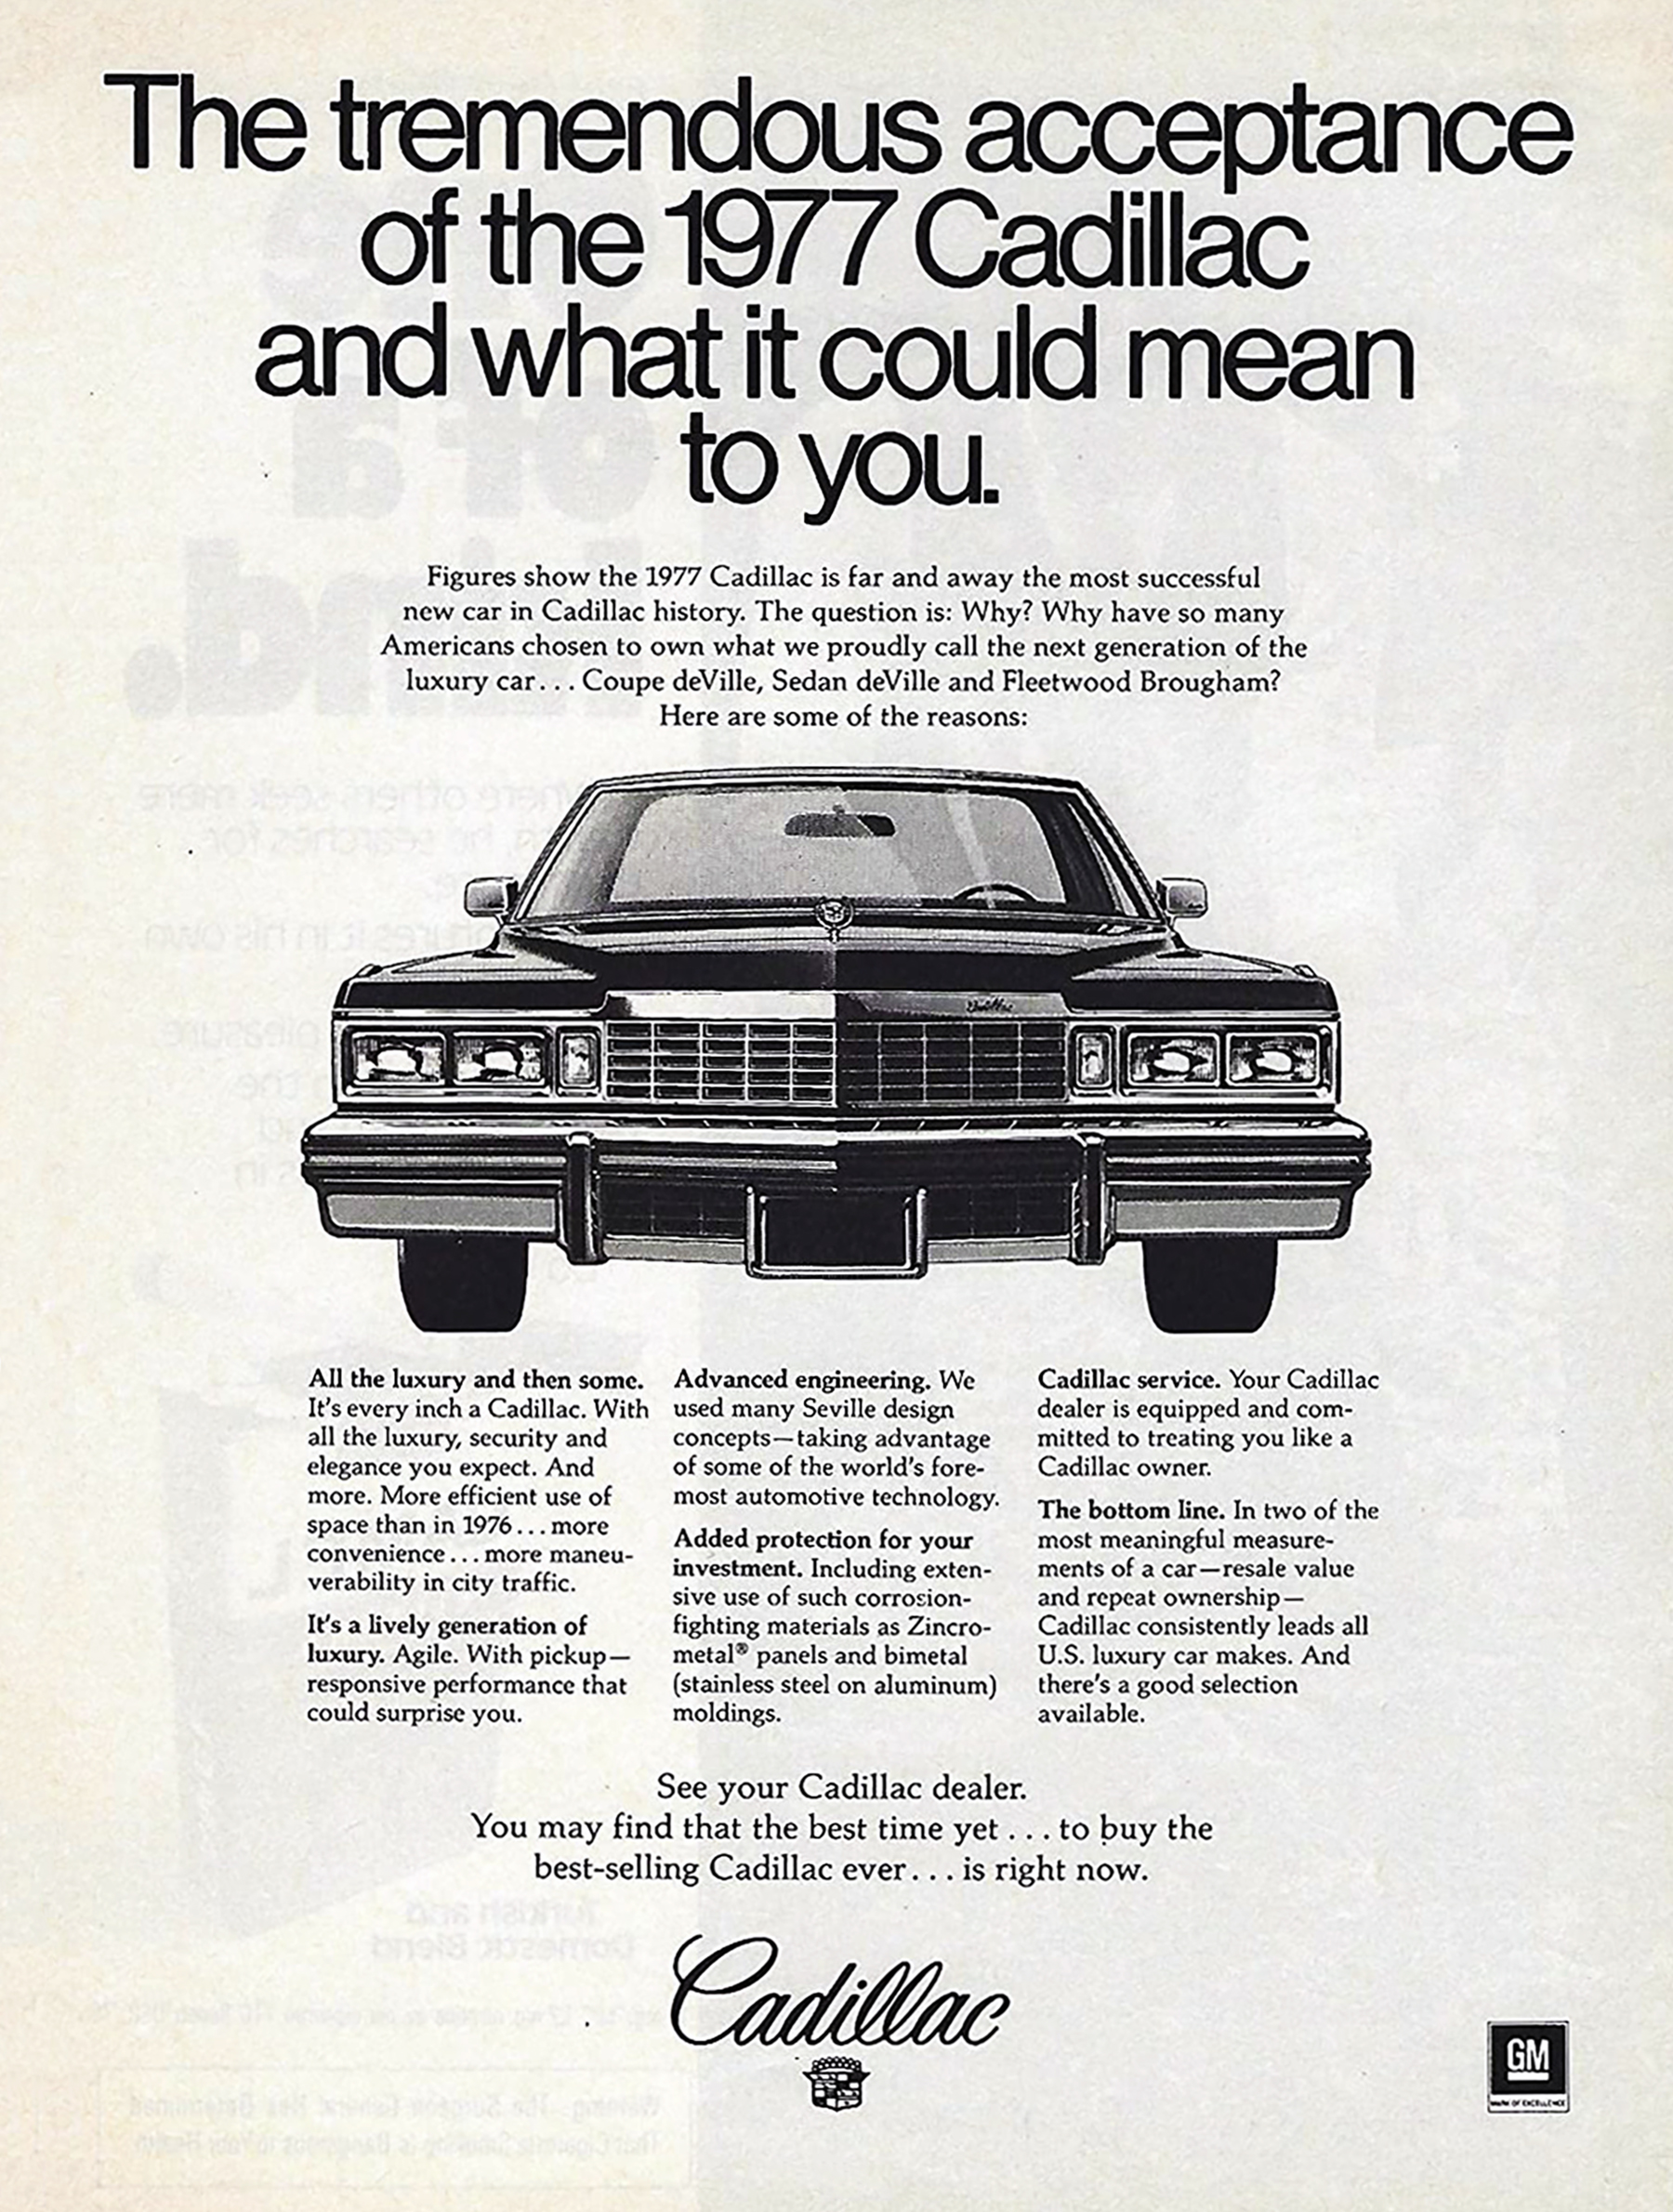 1984 Cadillac Cimarron Red Classic Advertisement Ad P60 